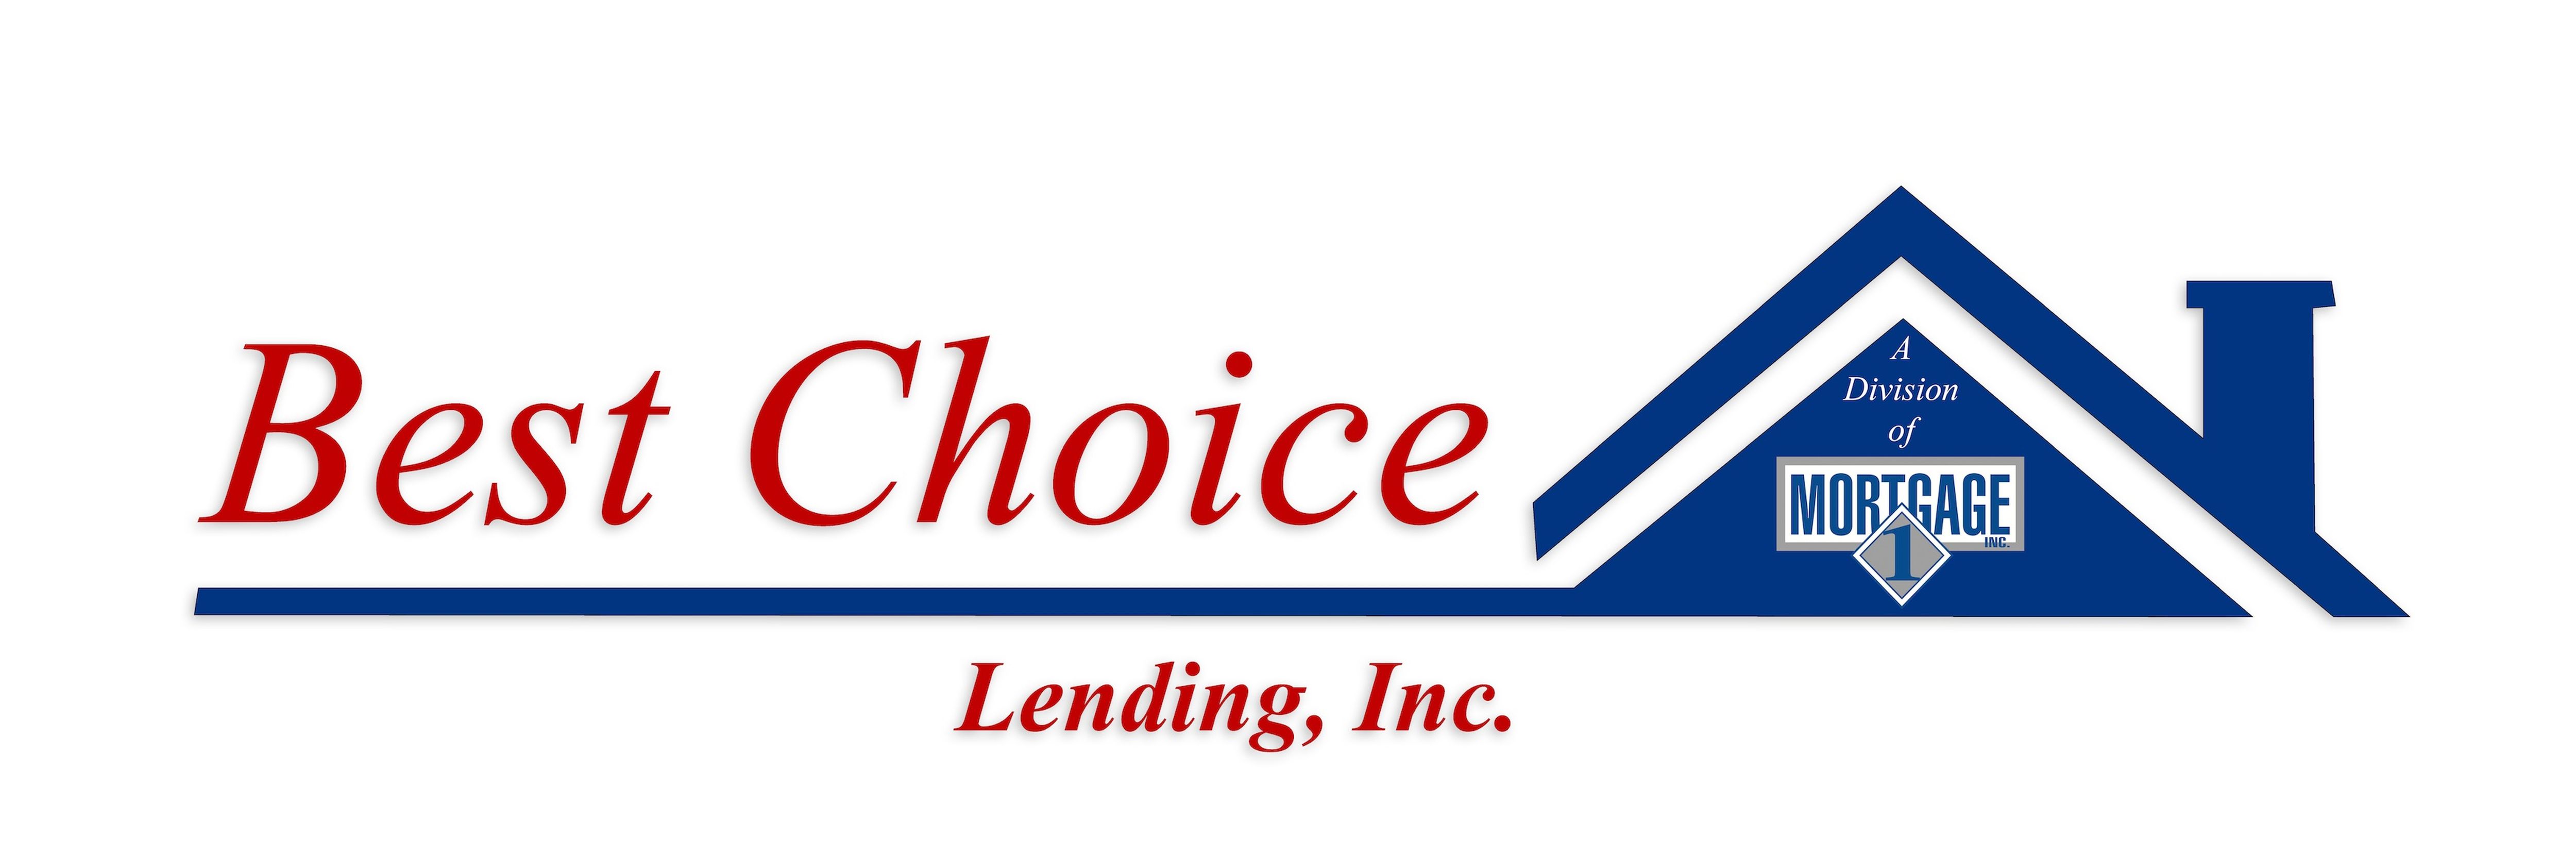 Best Choice Lending, Inc